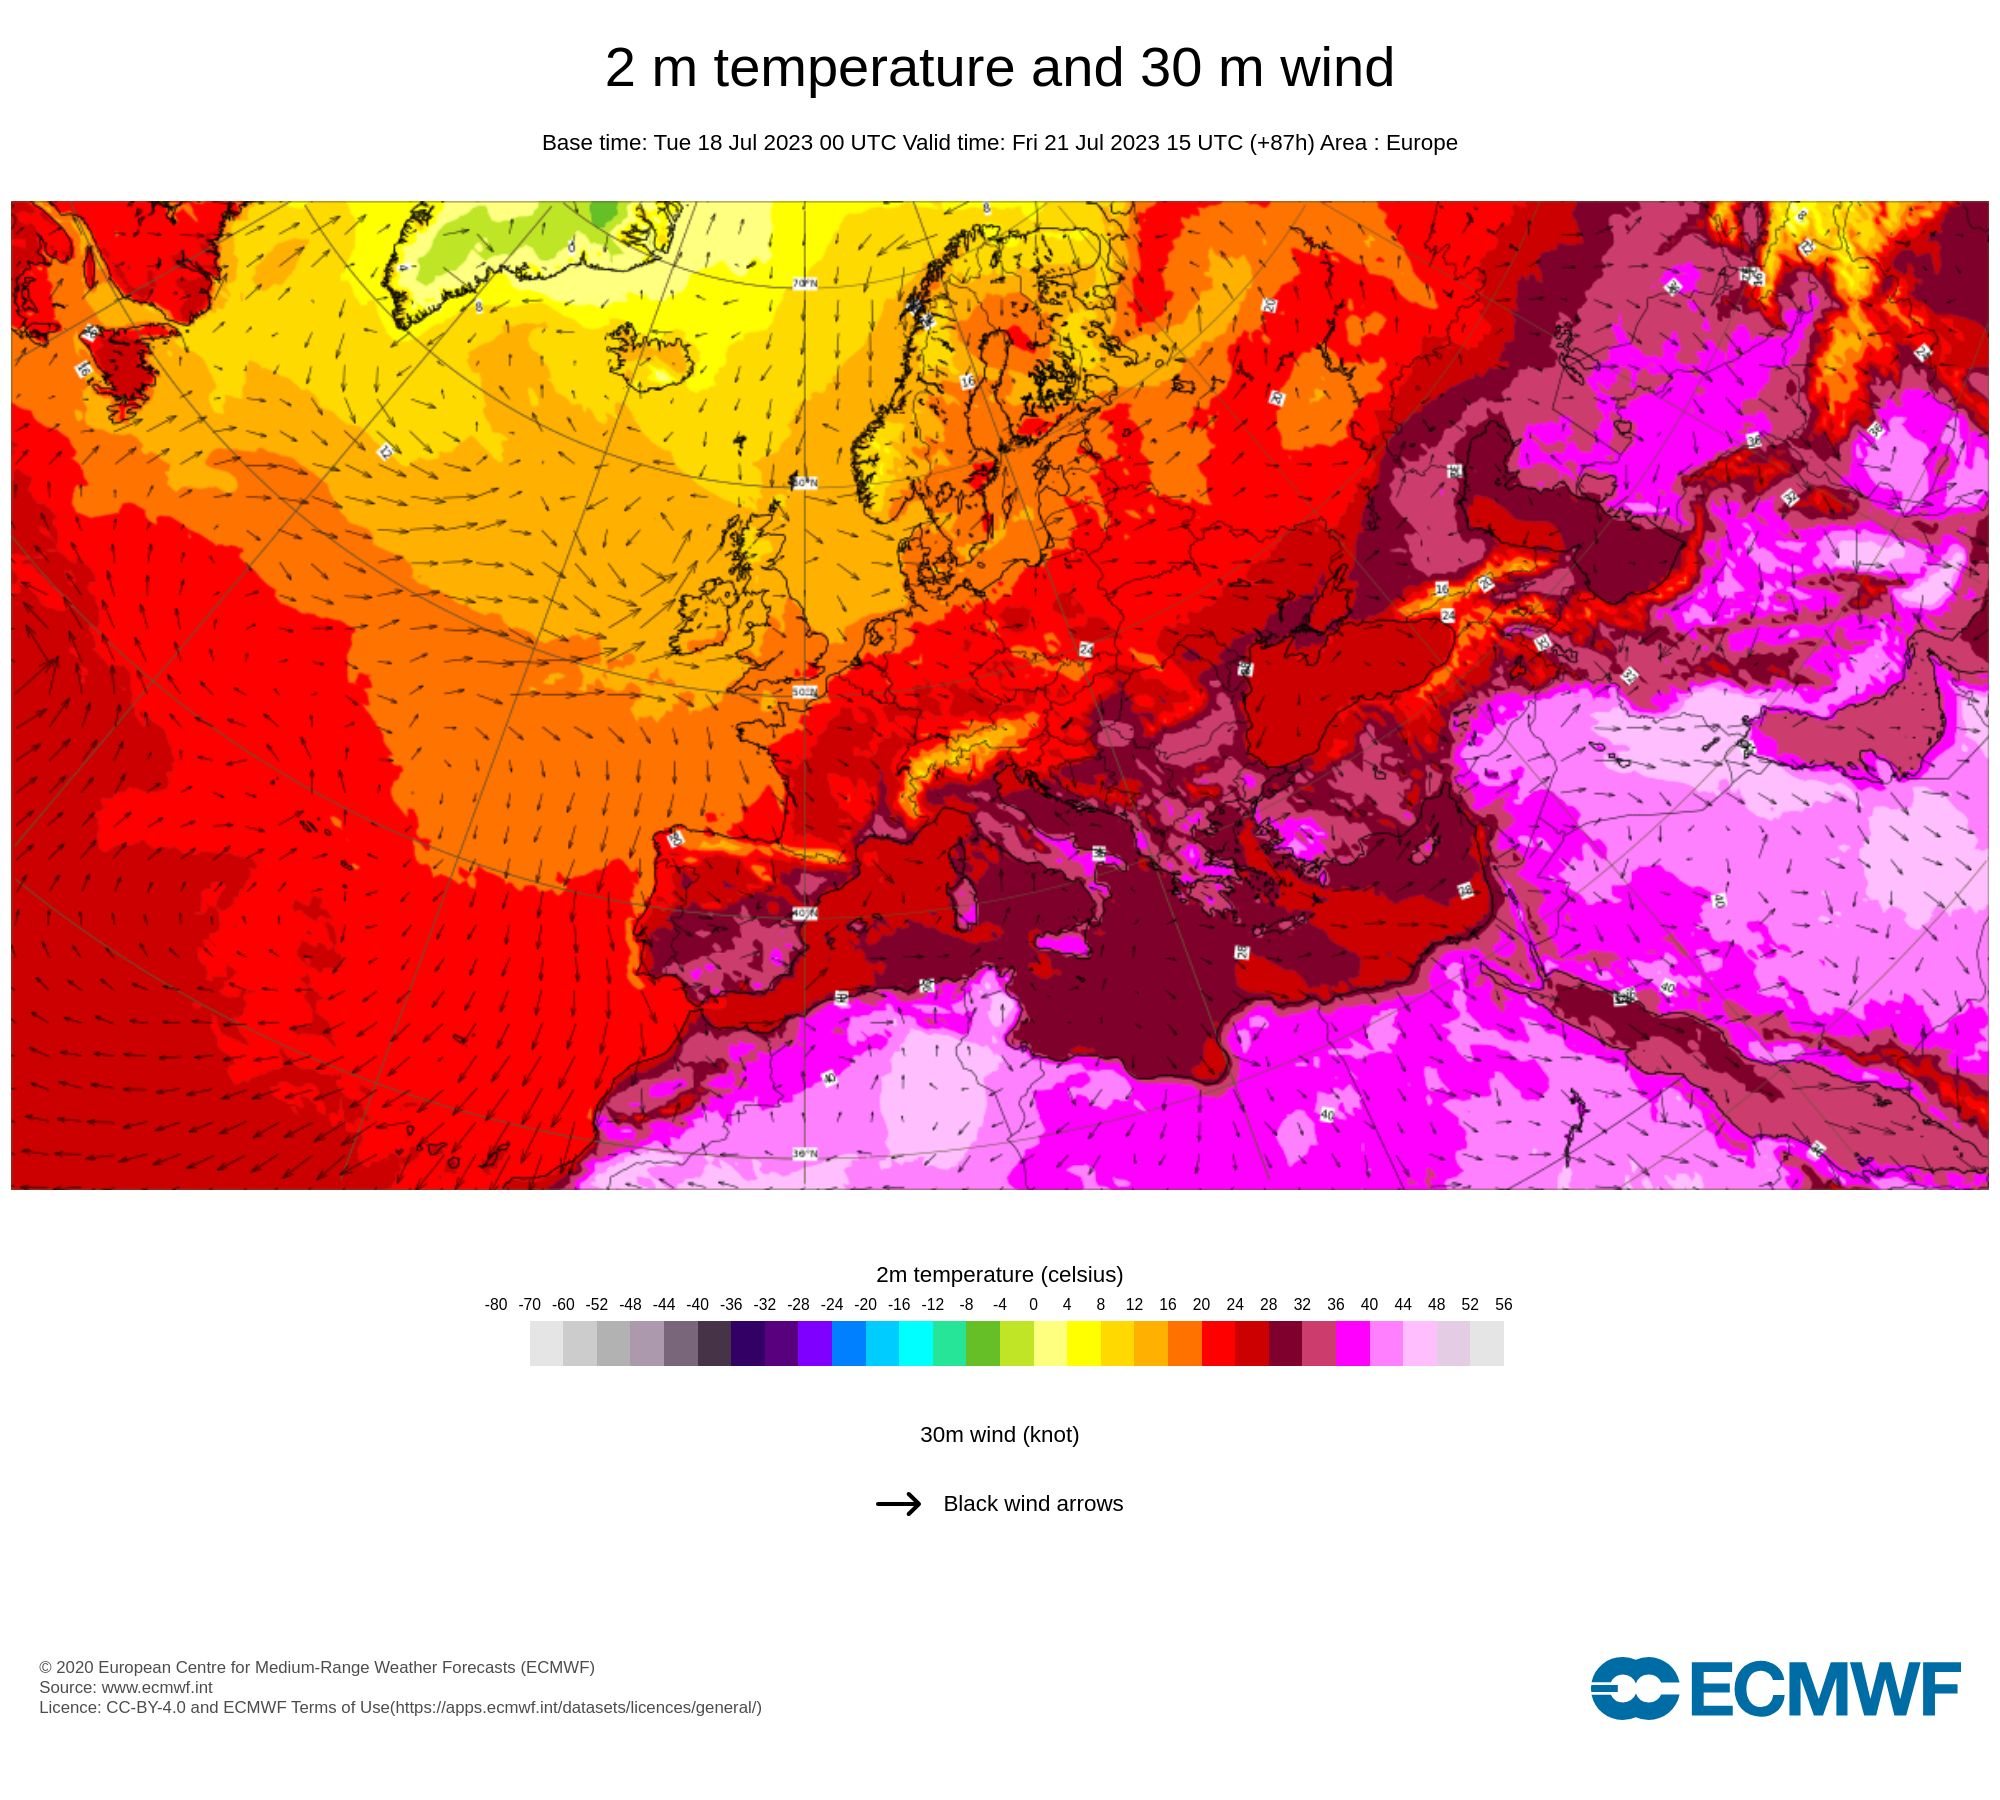 21 de julho de 2023: temperaturas às 16 horas (em Portugal continental)